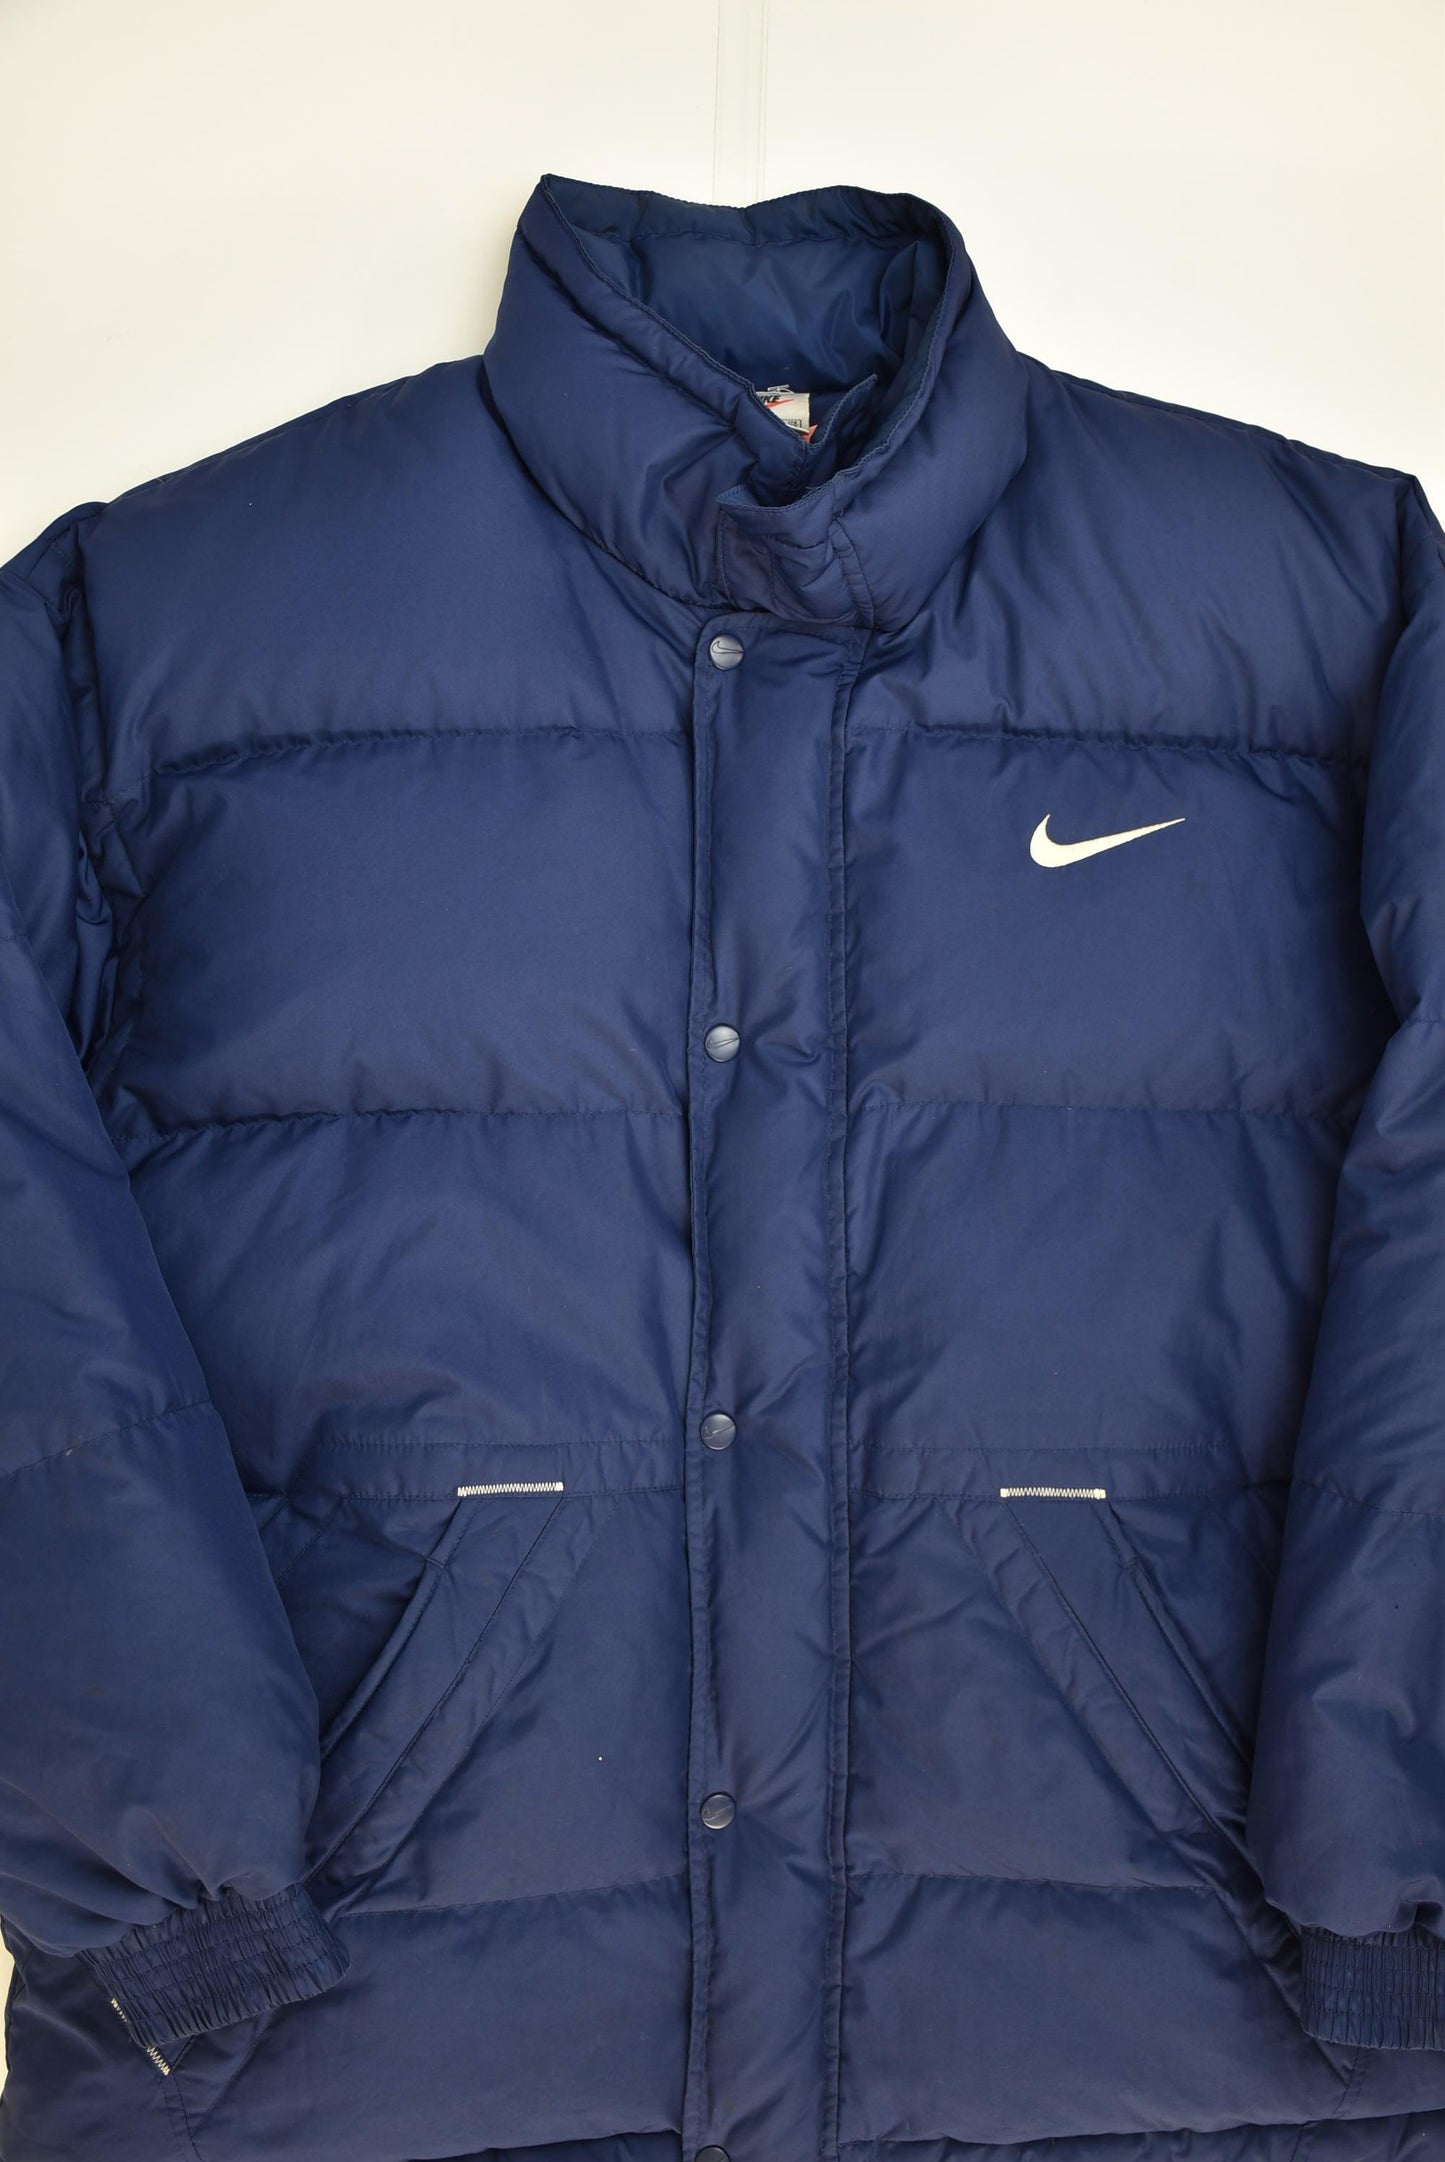 RARE 90s Nike Puffer Jacket (M)